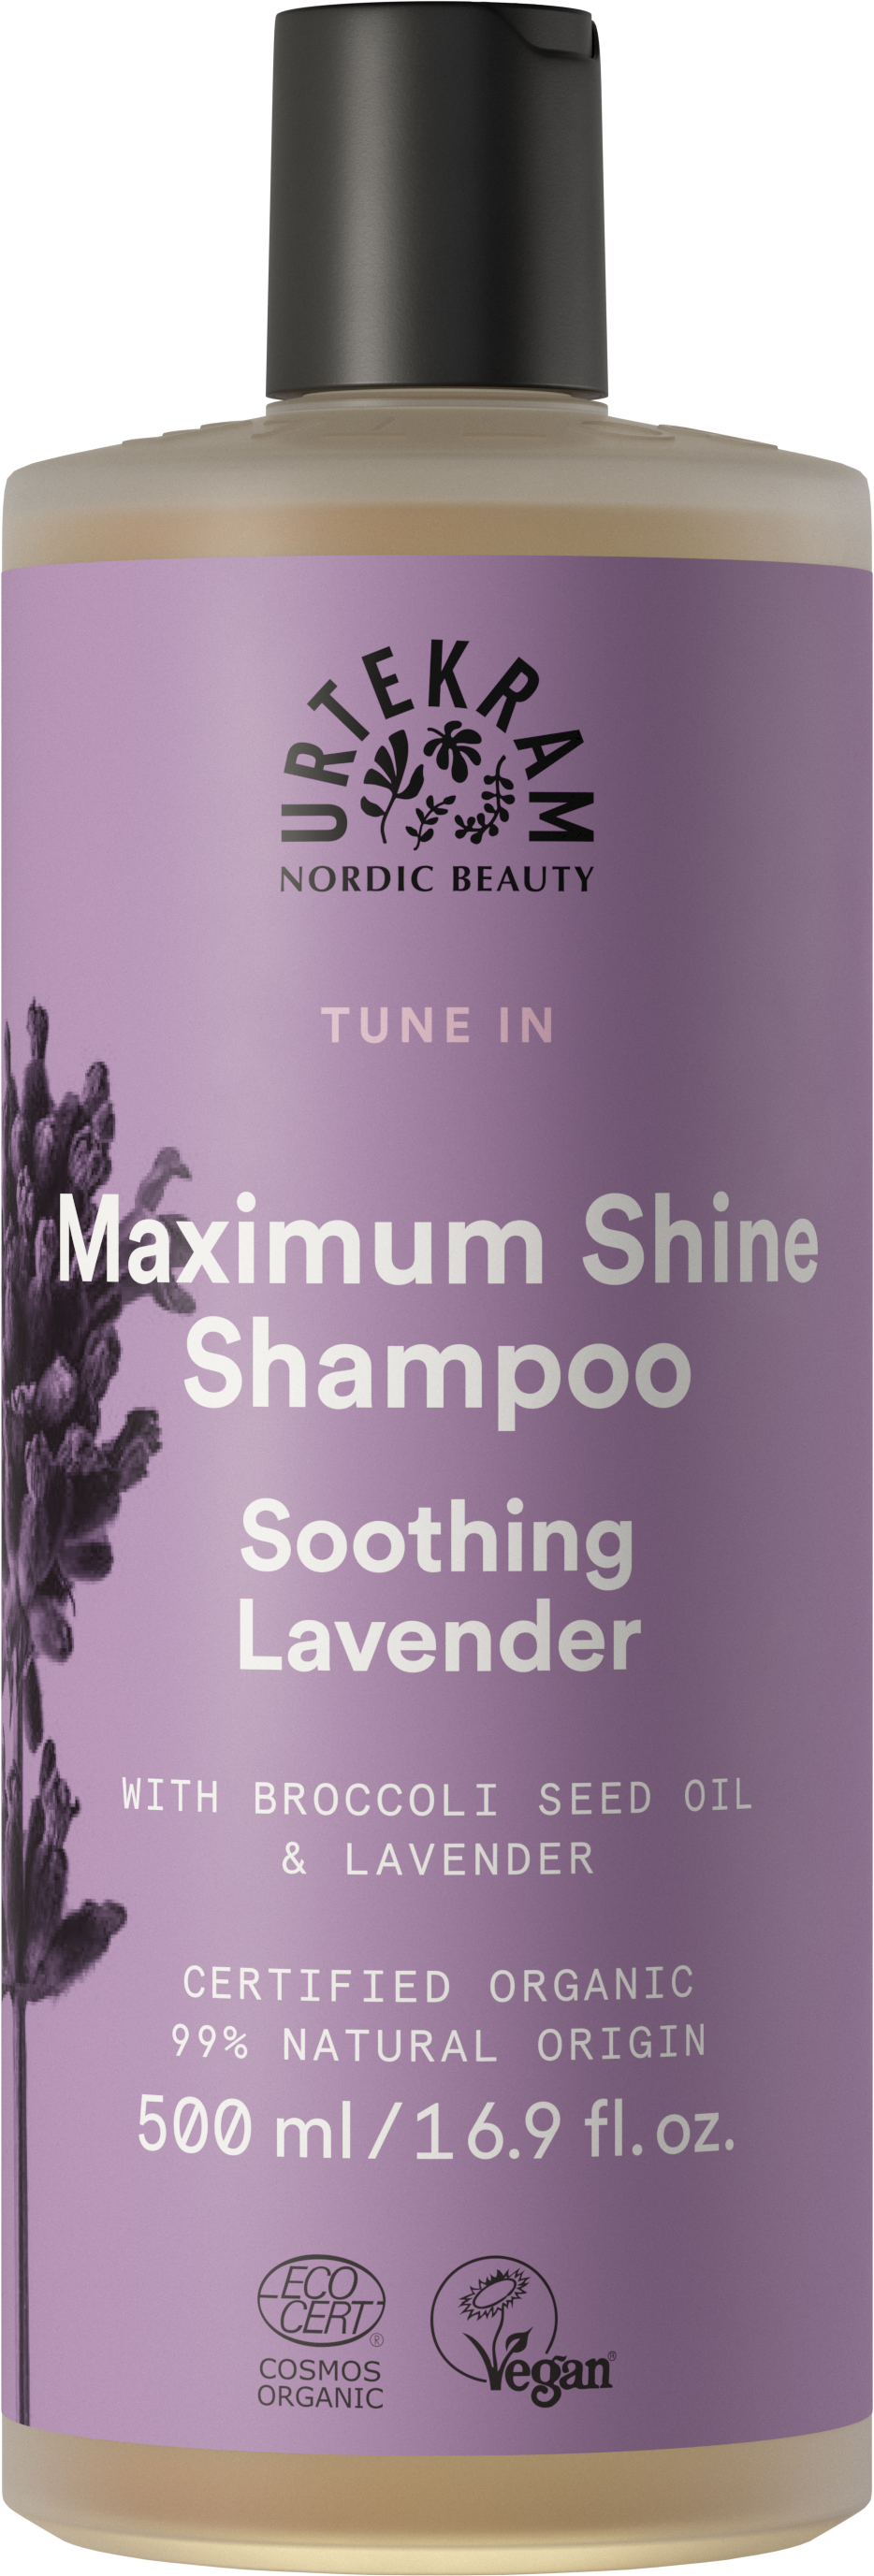 Soothing Lavender Shampoo 500 ml - Urtekram